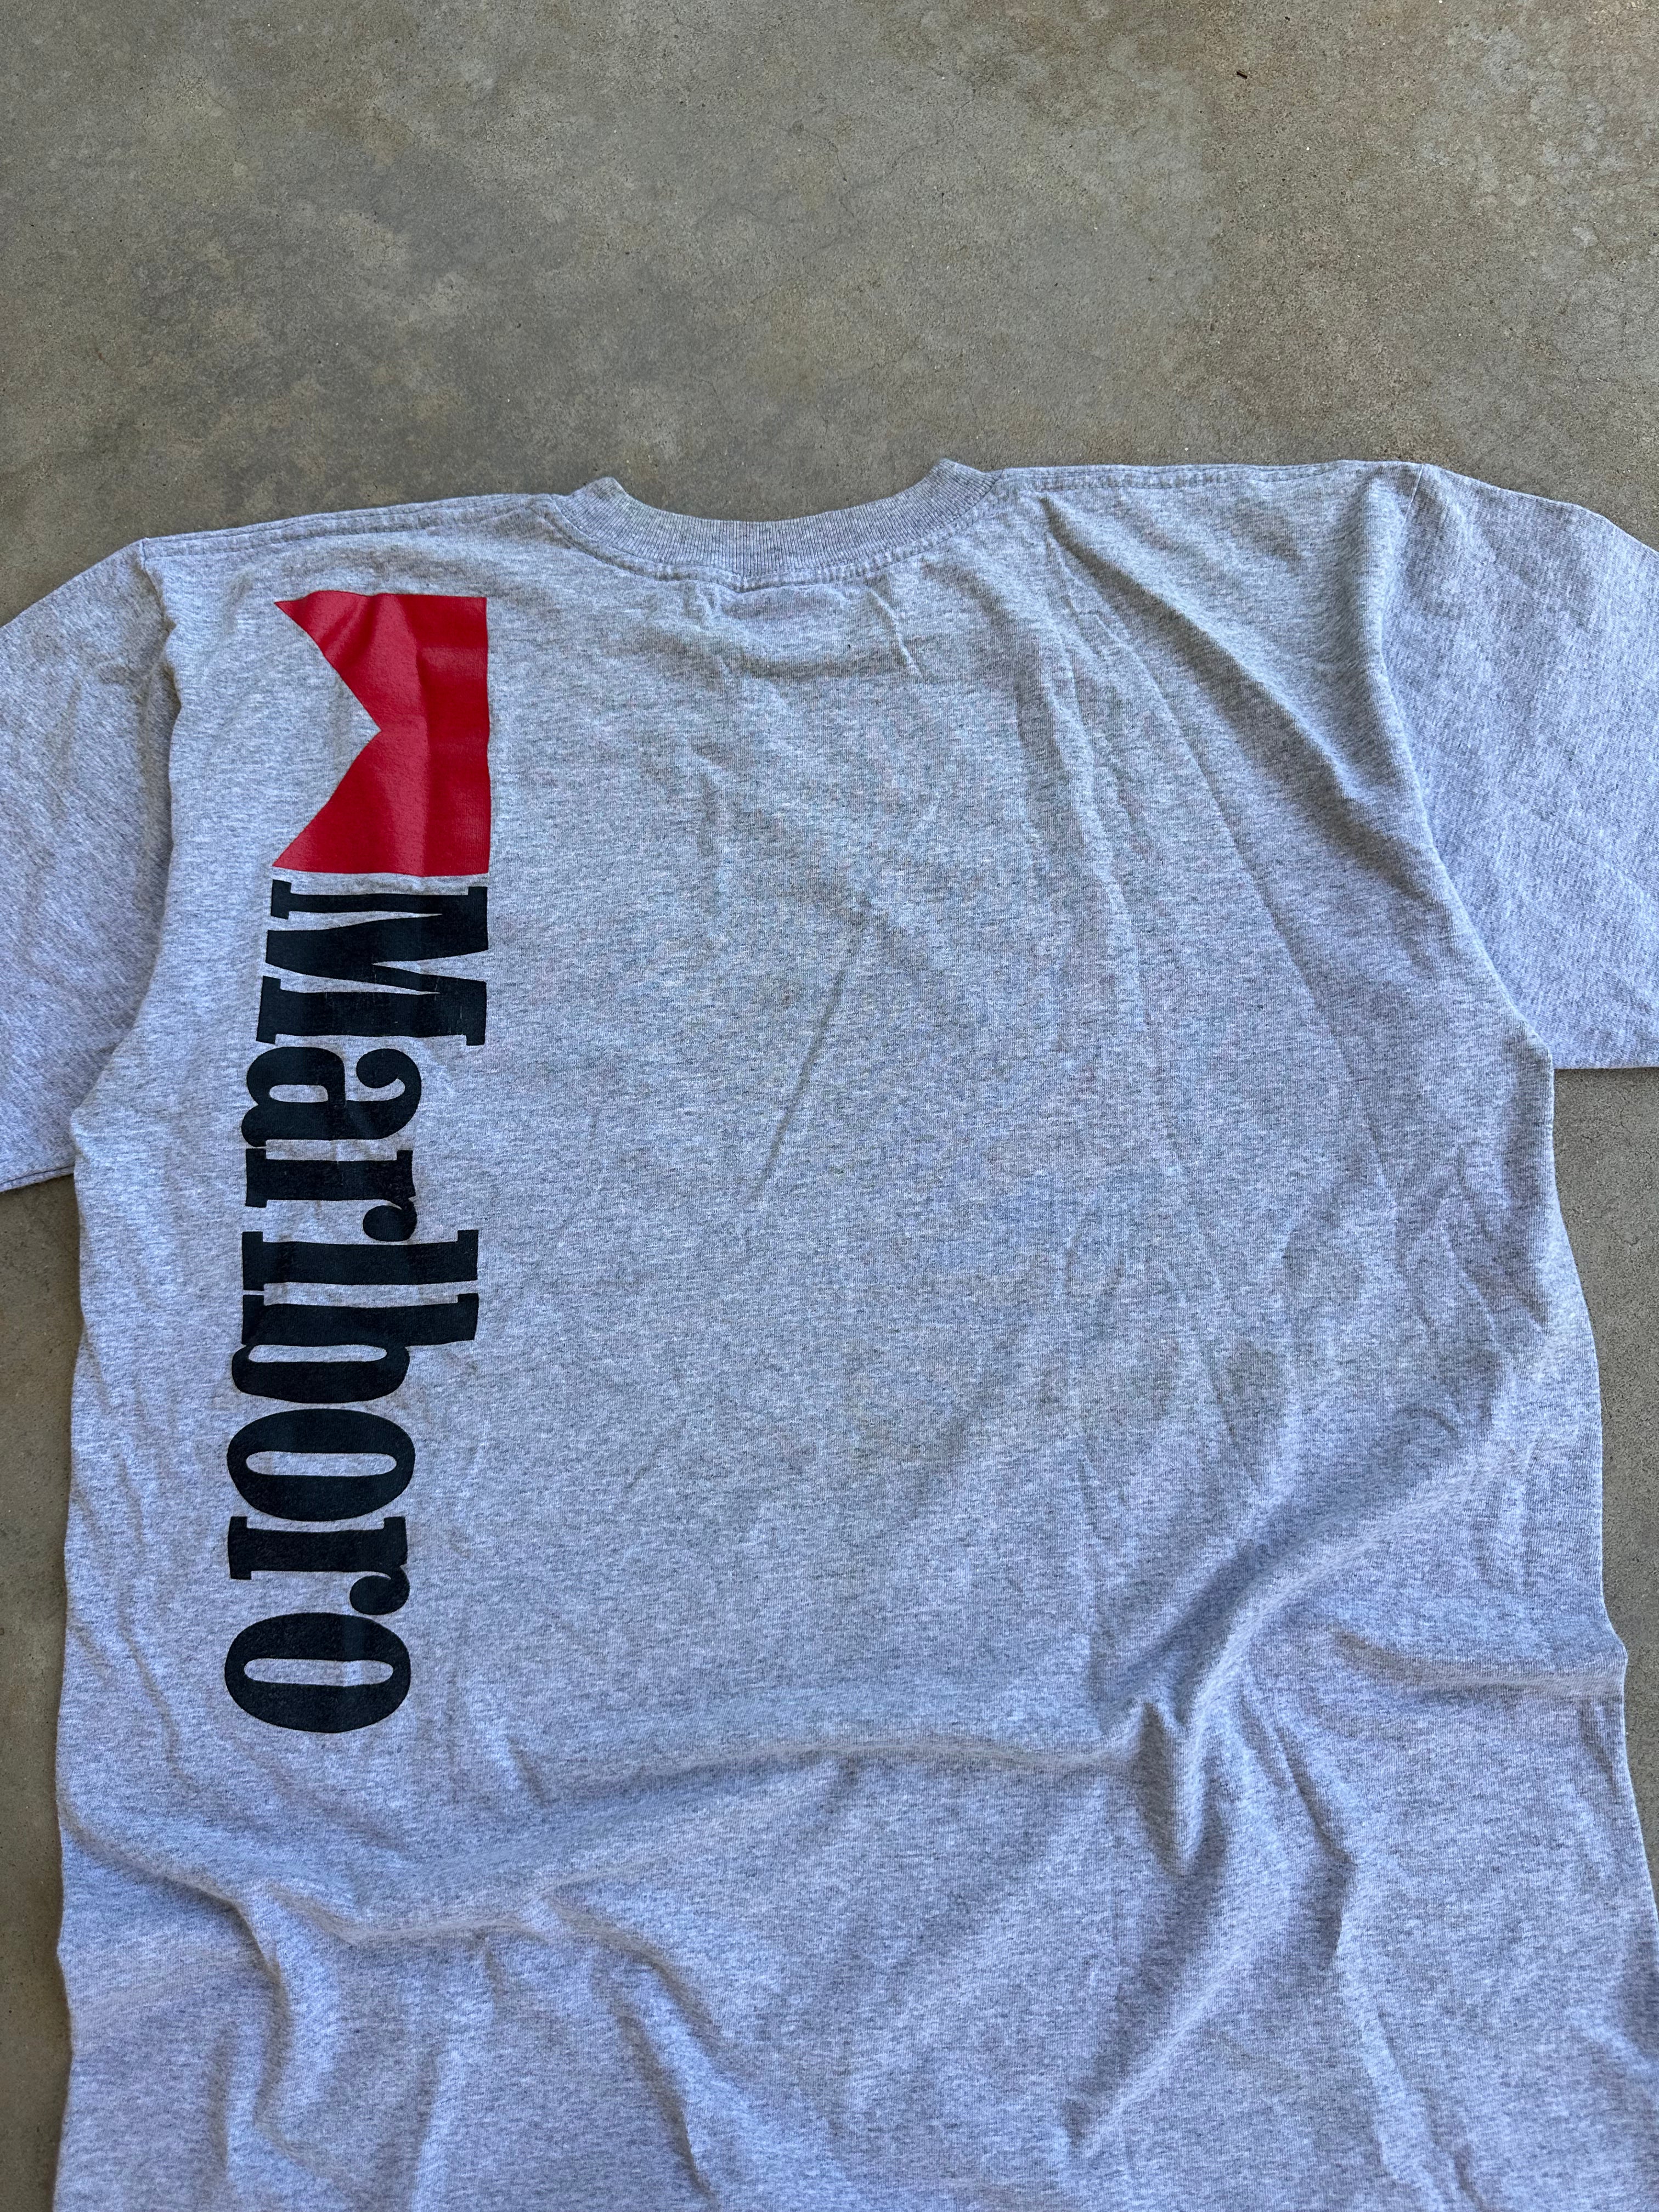 1990s Marlboro Pocket T-Shirt (XL)